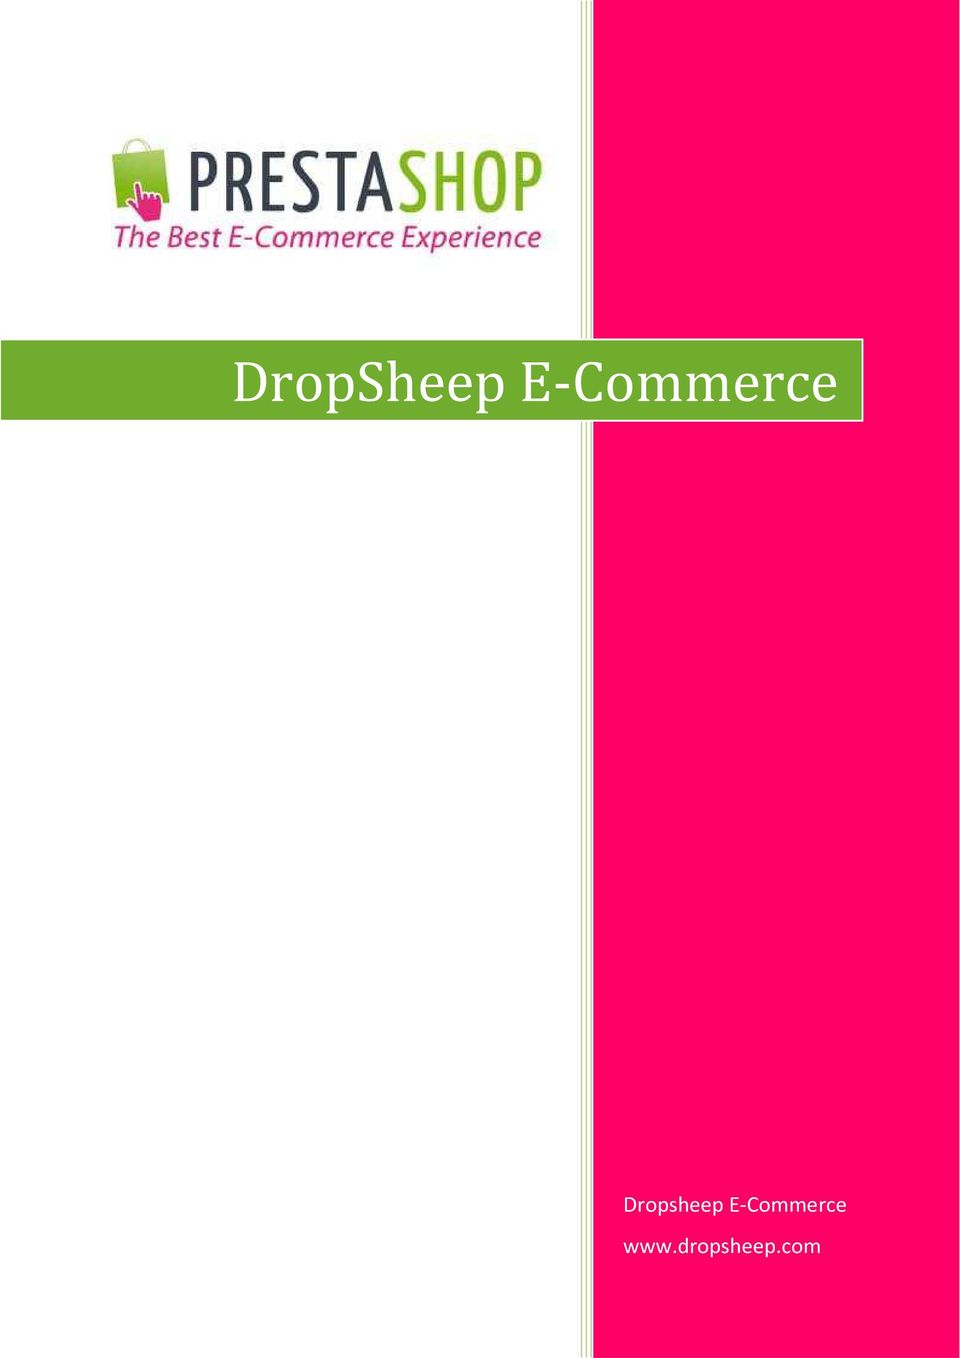 Dropsheep  www.